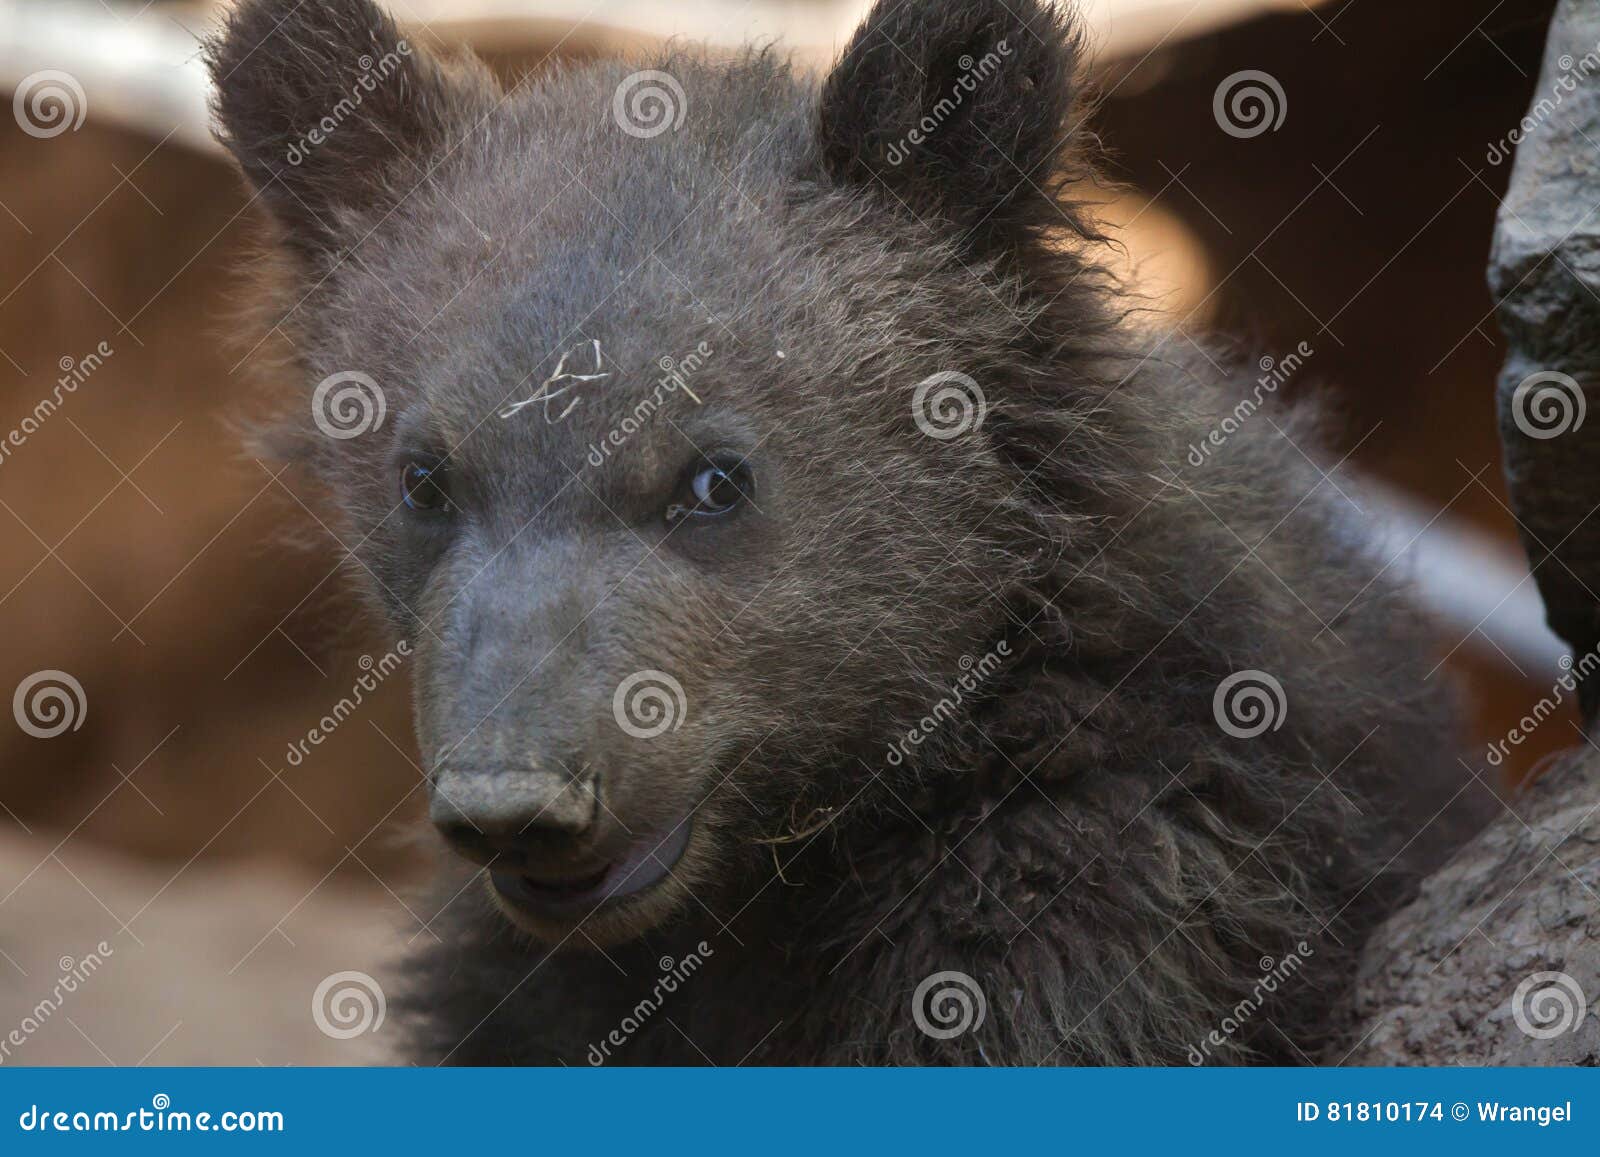 kamchatka brown bear ursus arctos beringianus